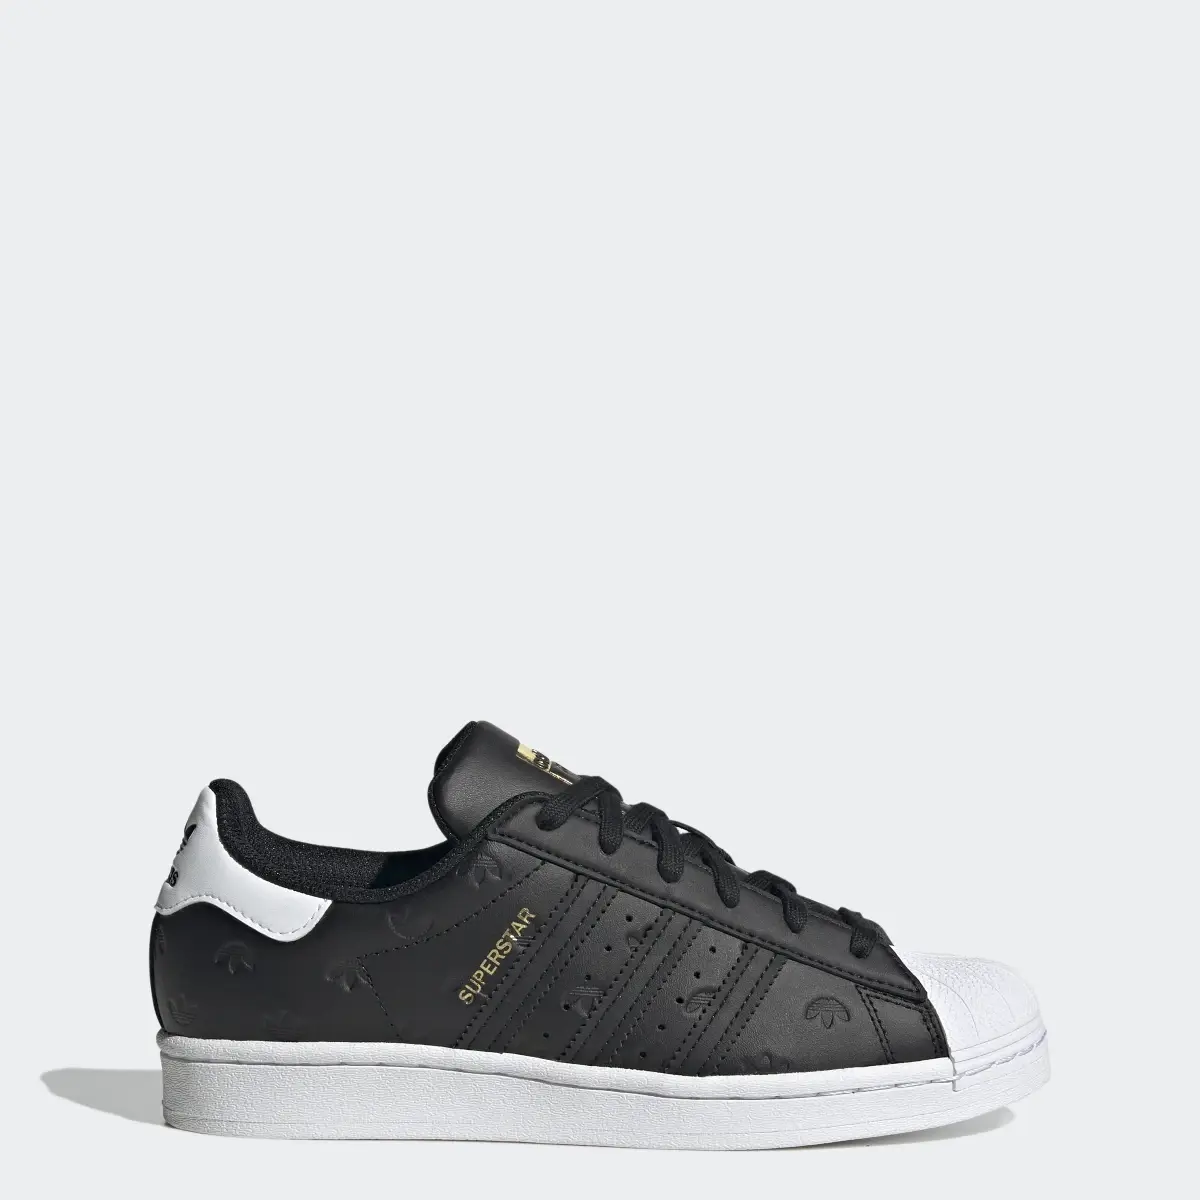 Adidas Superstar Shoes. 1